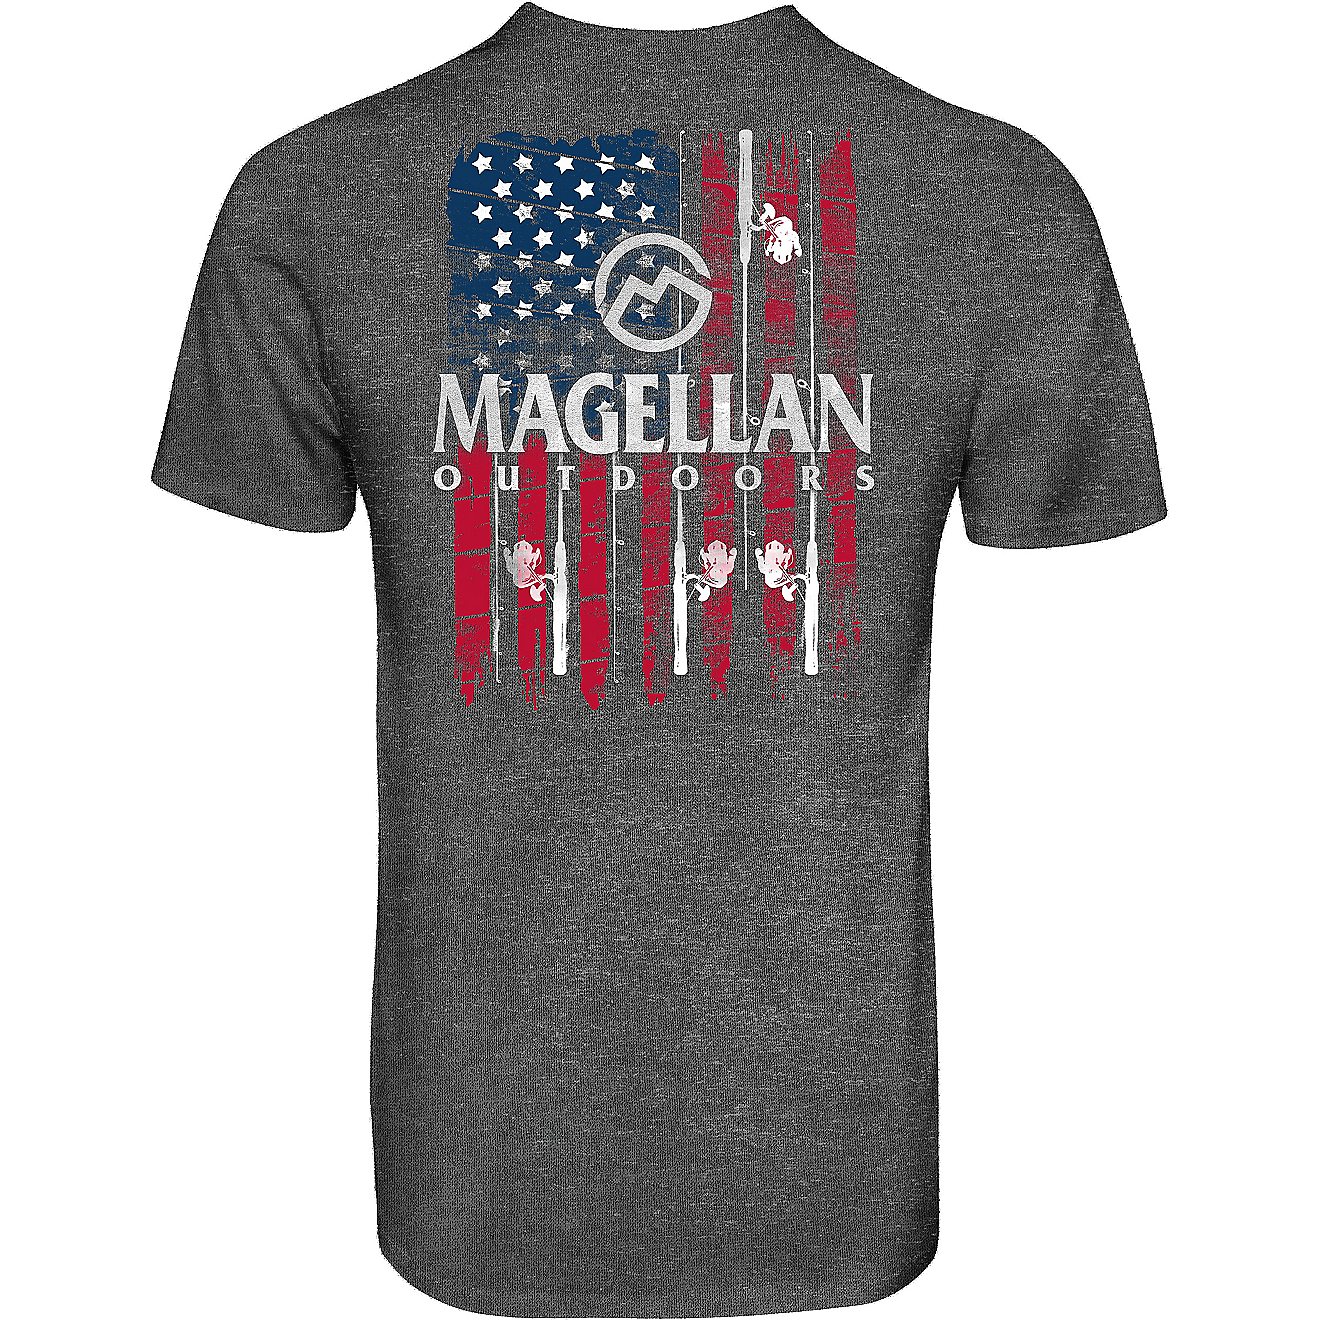 Magellan Outdoors Men's CHIPPED FLAG Short Sleeve T-shirt                                                                        - view number 1